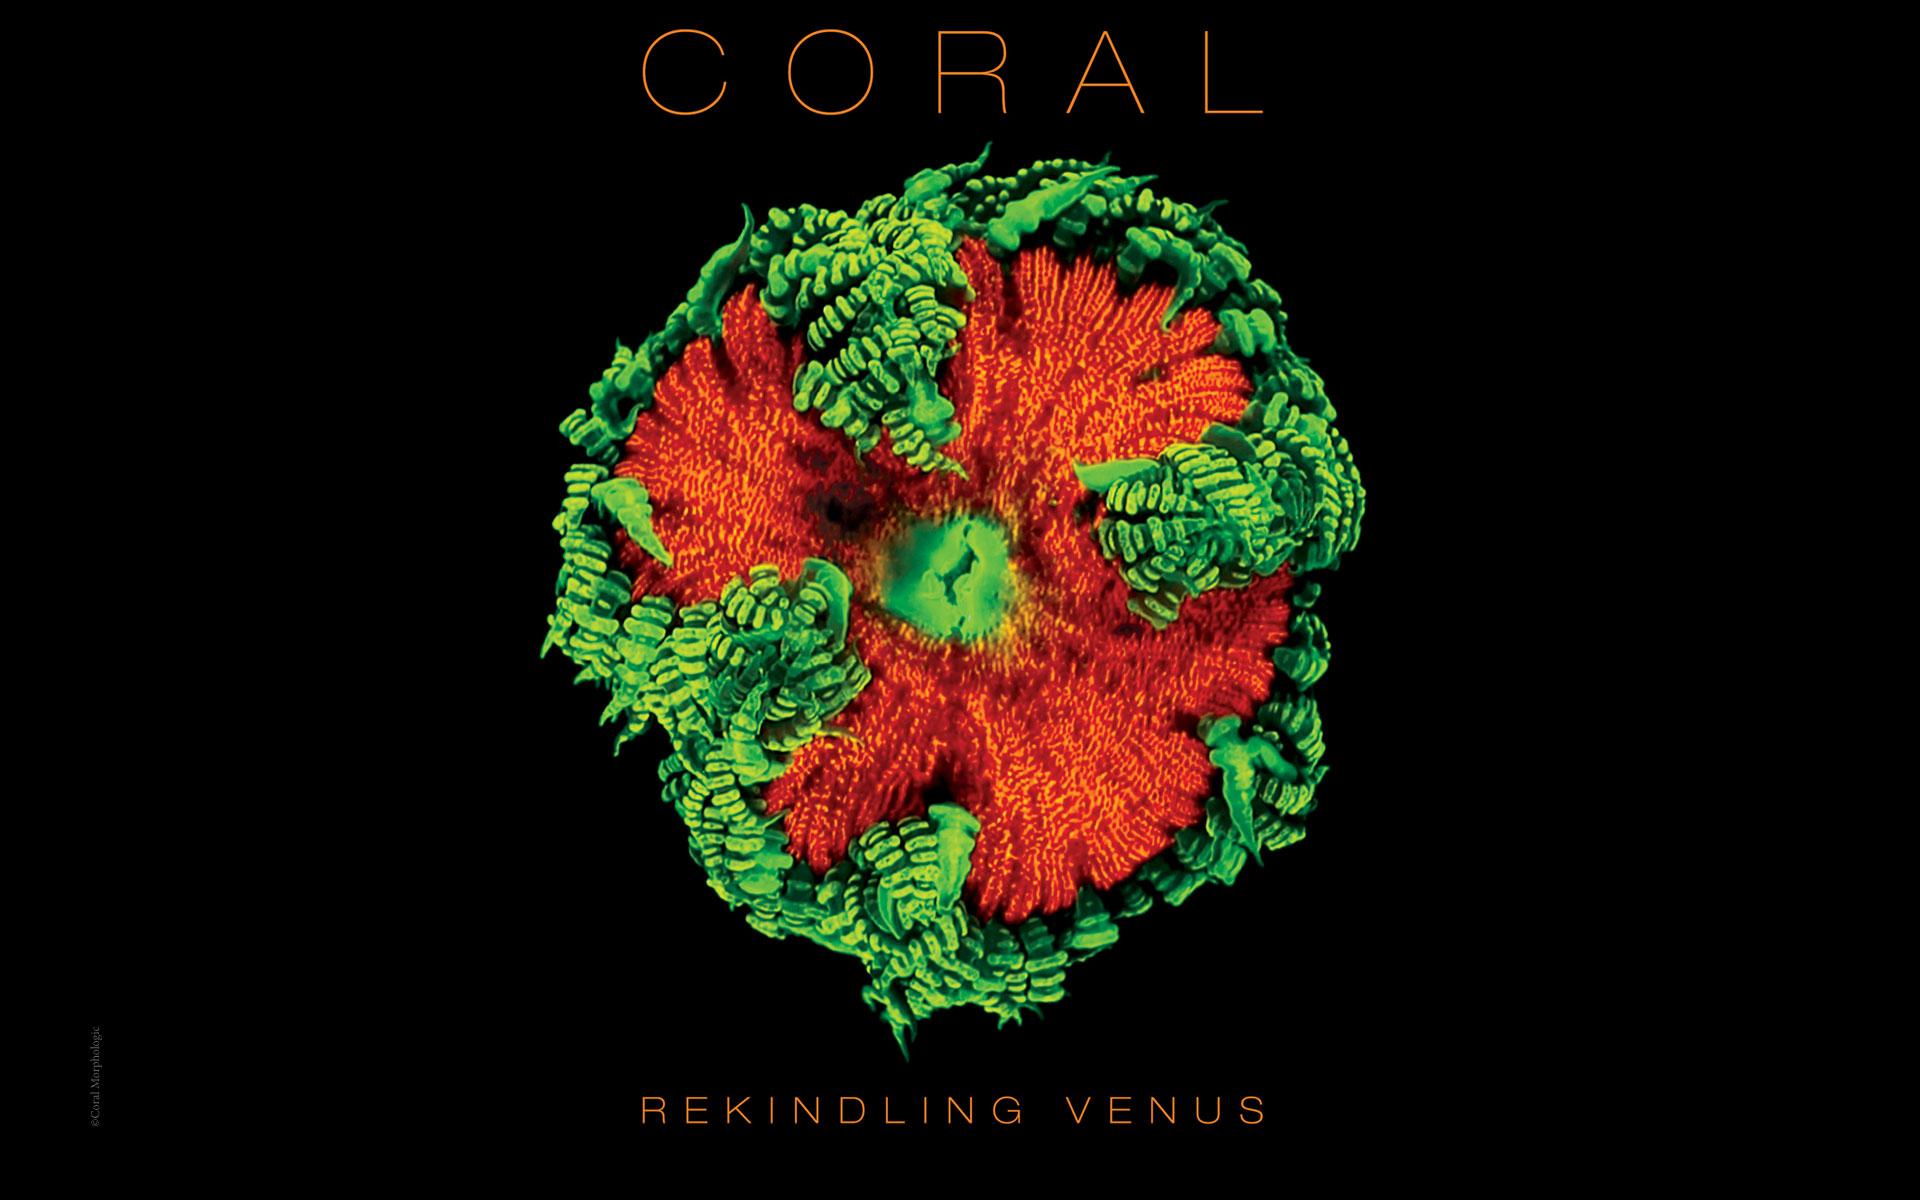 Exclusive Downloads. Lynette Wallworth Coral Rekindling Venus